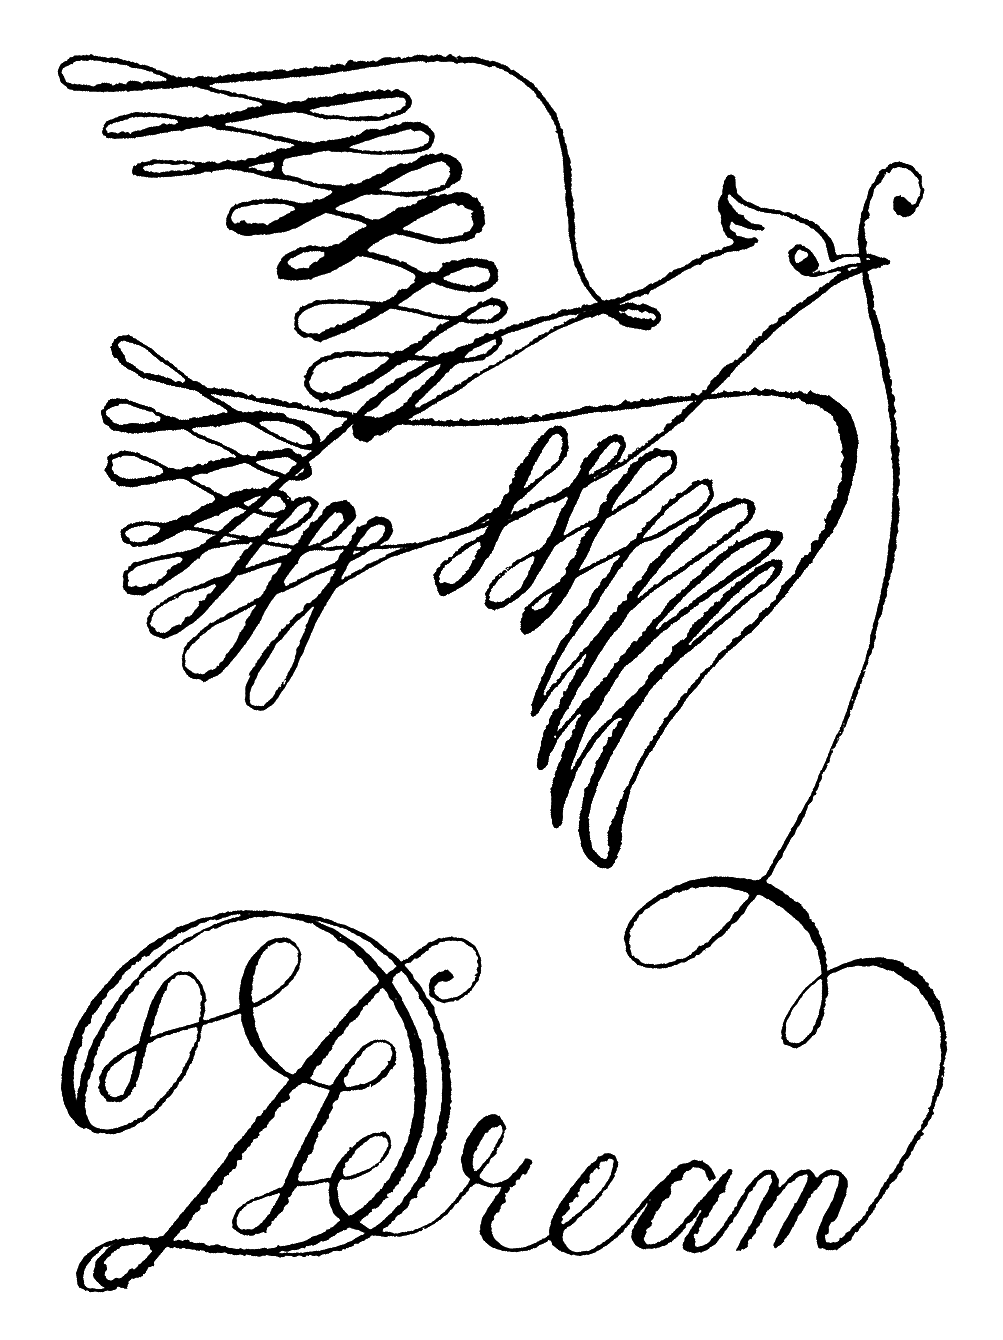 ESDG_Papyrus_Dream_INK